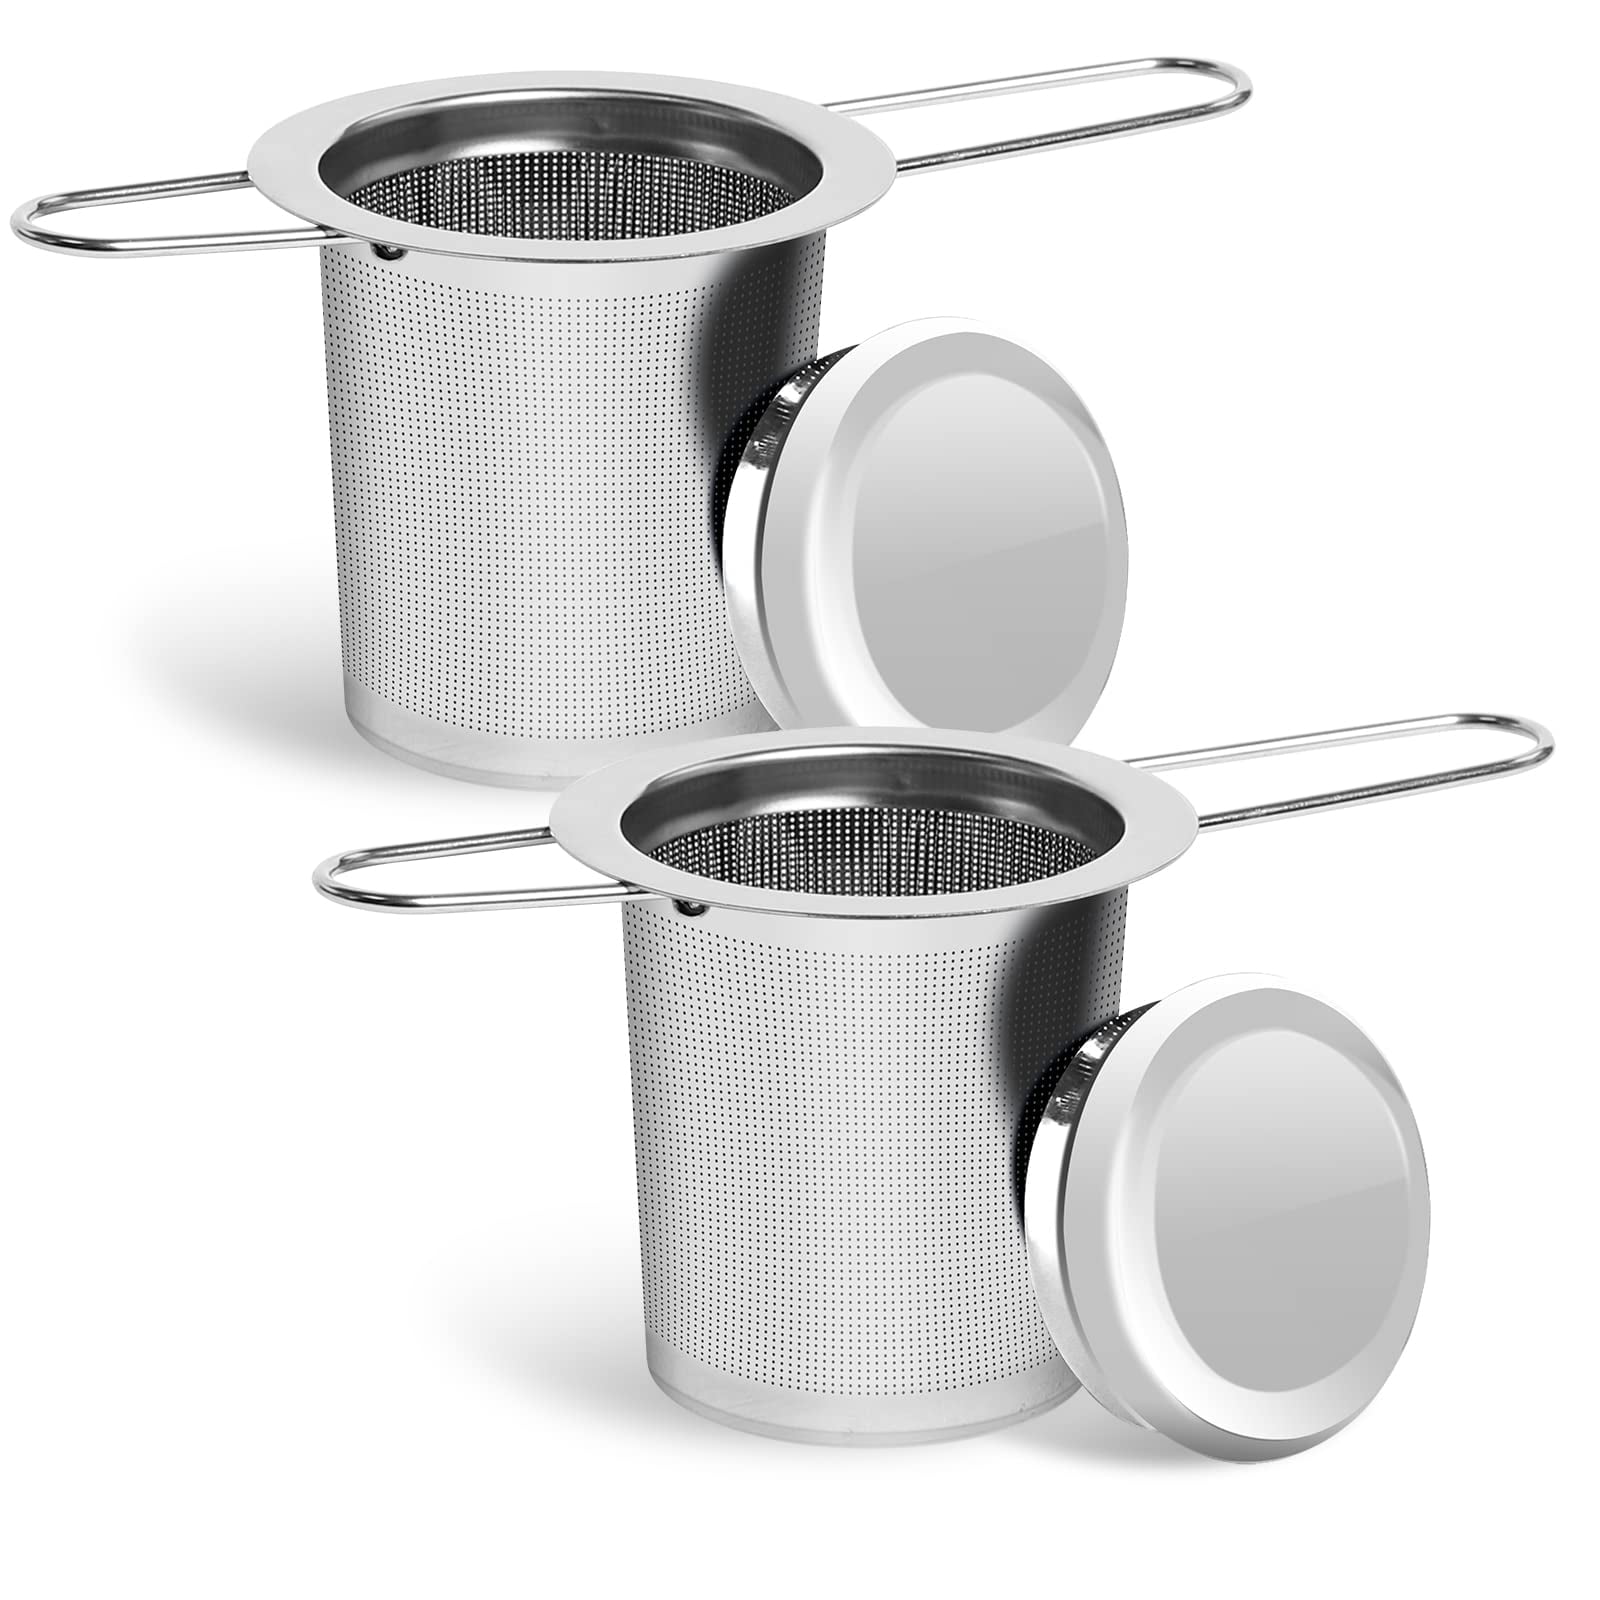 T-sac Mulit Use Tea Filter Brew Basket Re-usableTea Strainer Brand New 